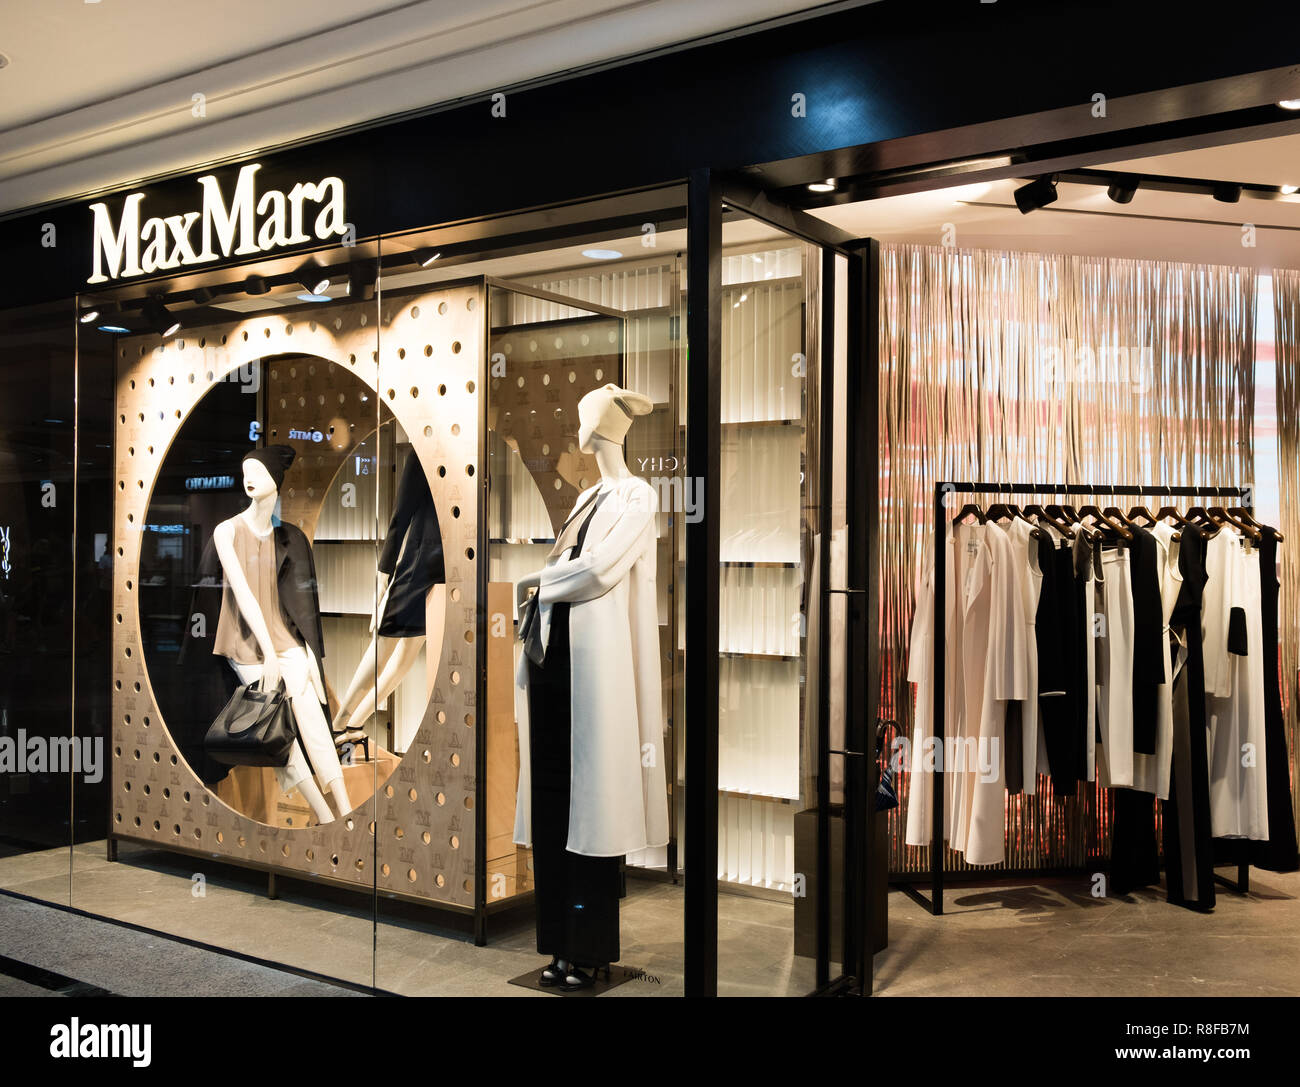 Max mara window display hi-res stock photography and images - Alamy